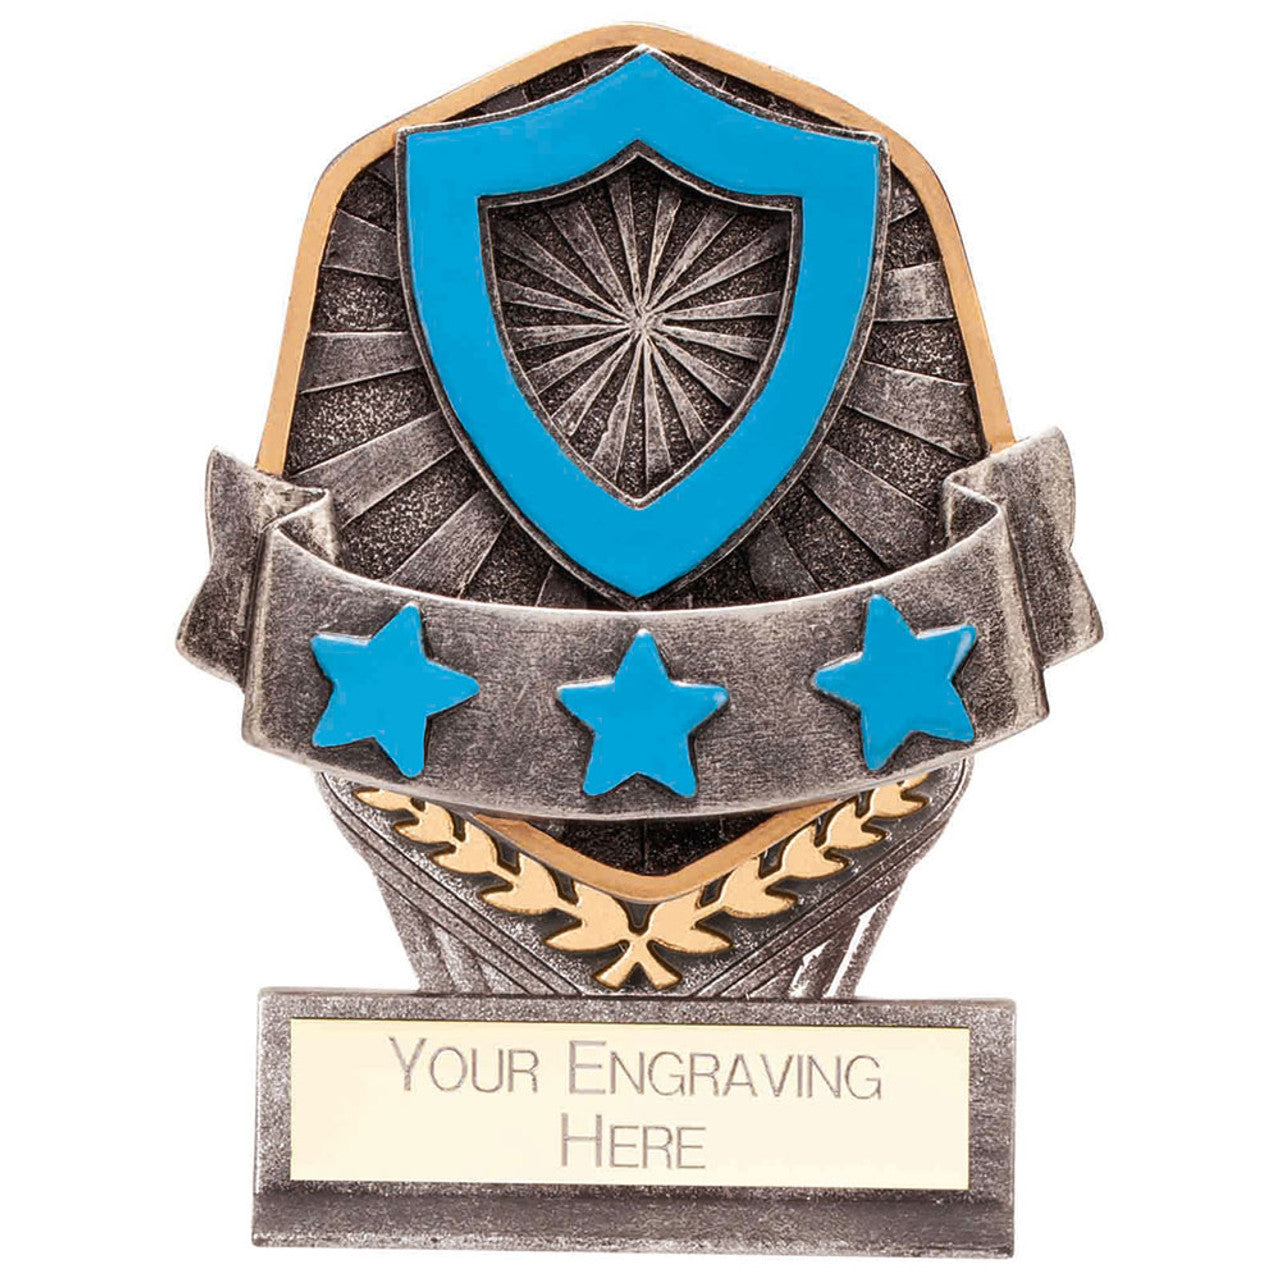 House Blue Falcon Trophy